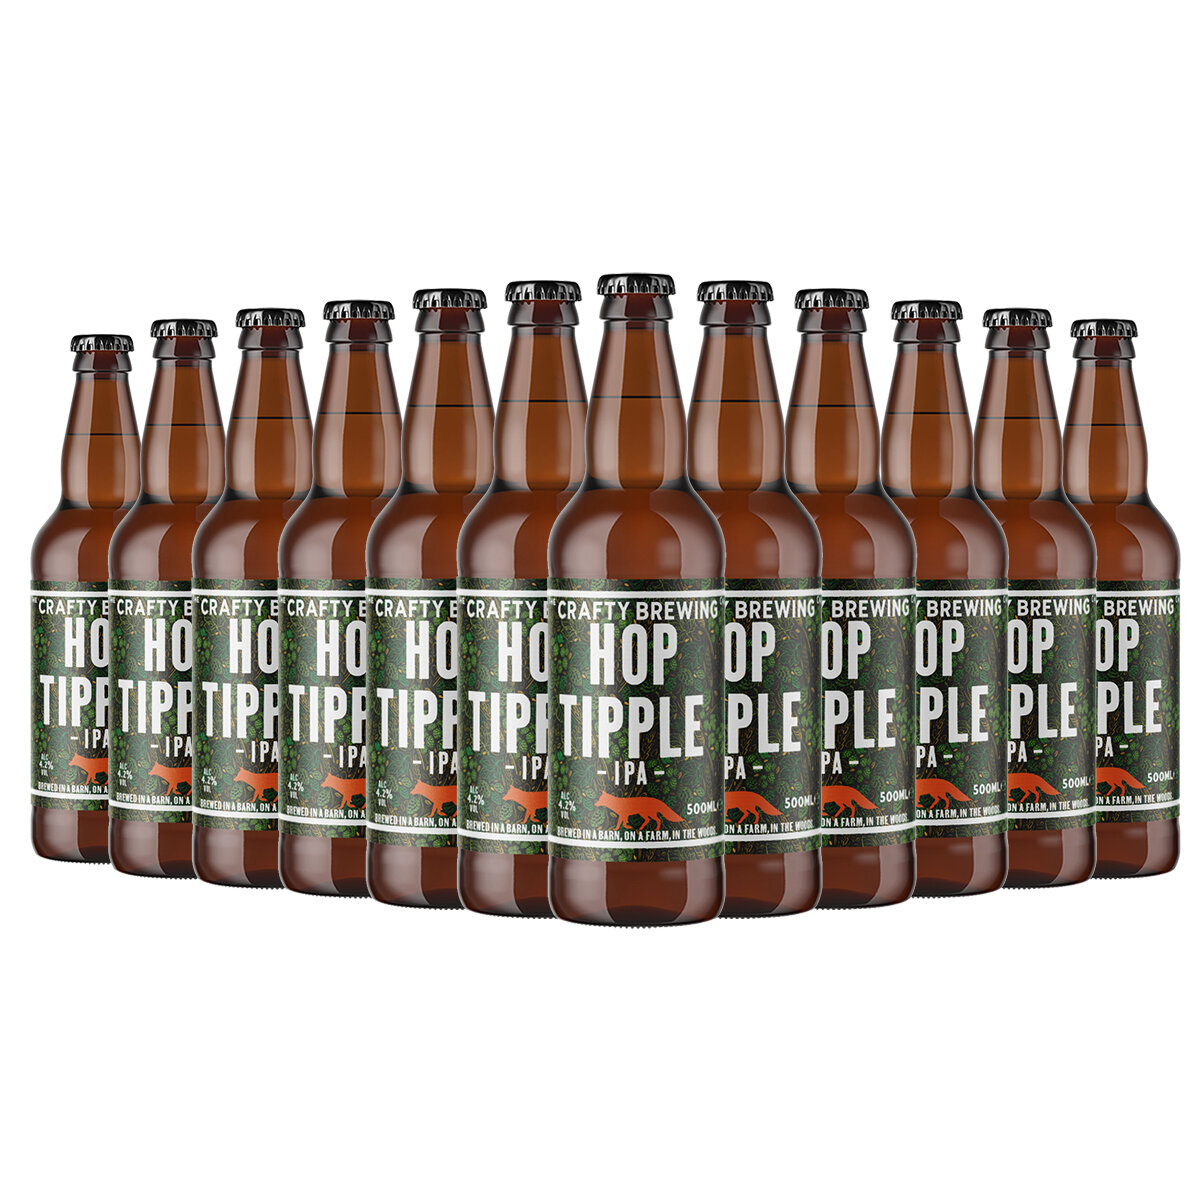 12 x 500ml bottles of Hop Tipple IPA